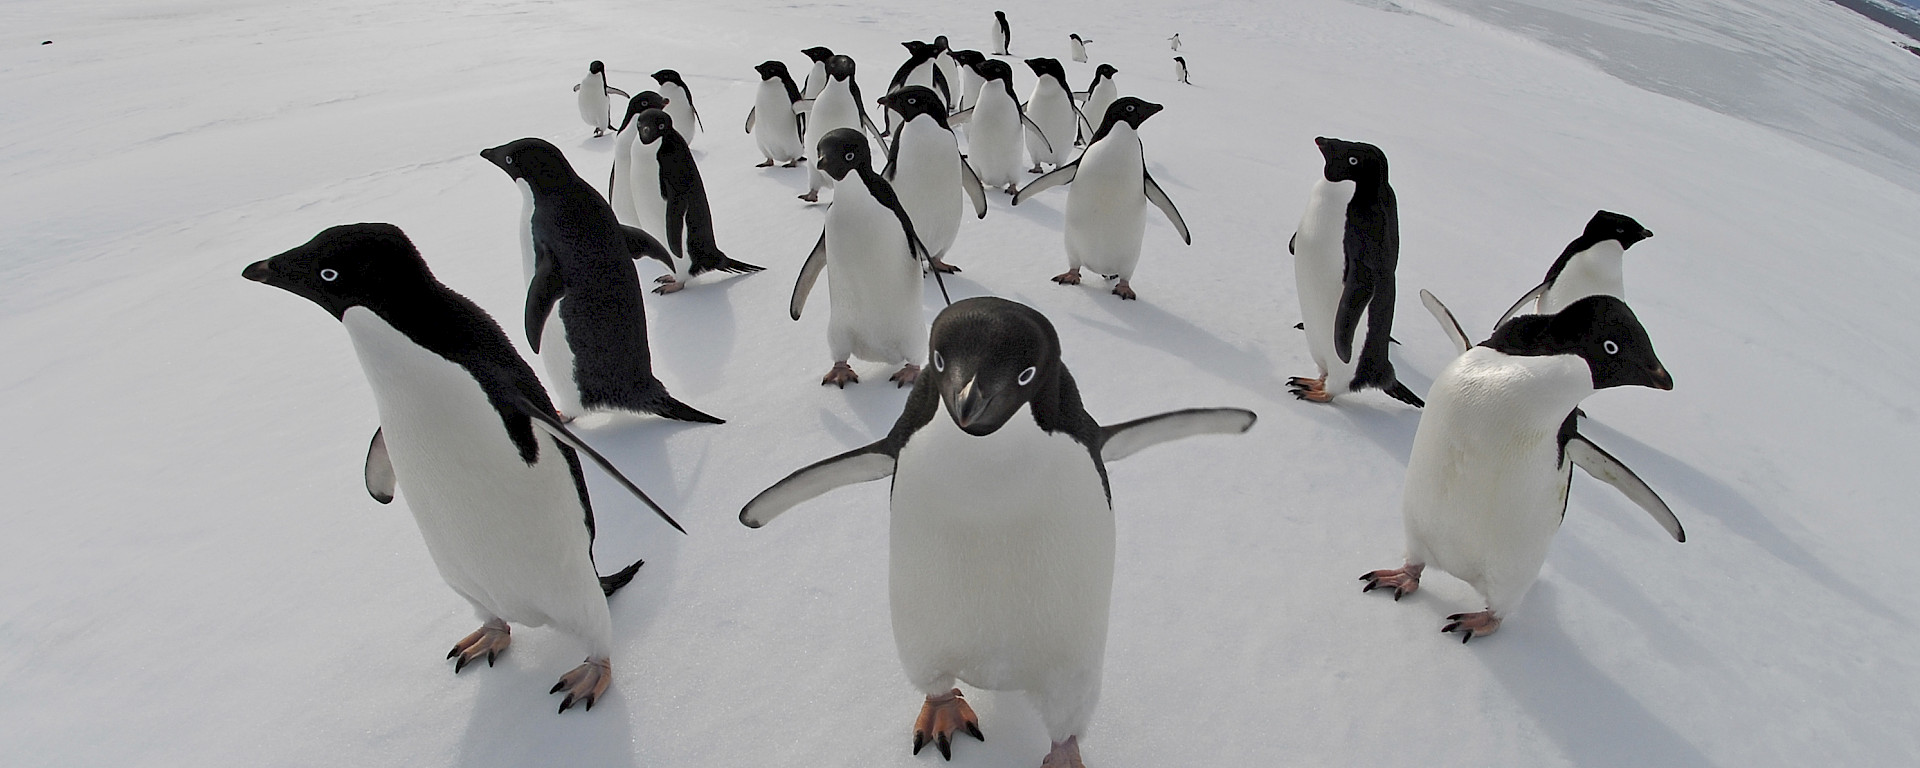 Image: Penguins in Antarctica